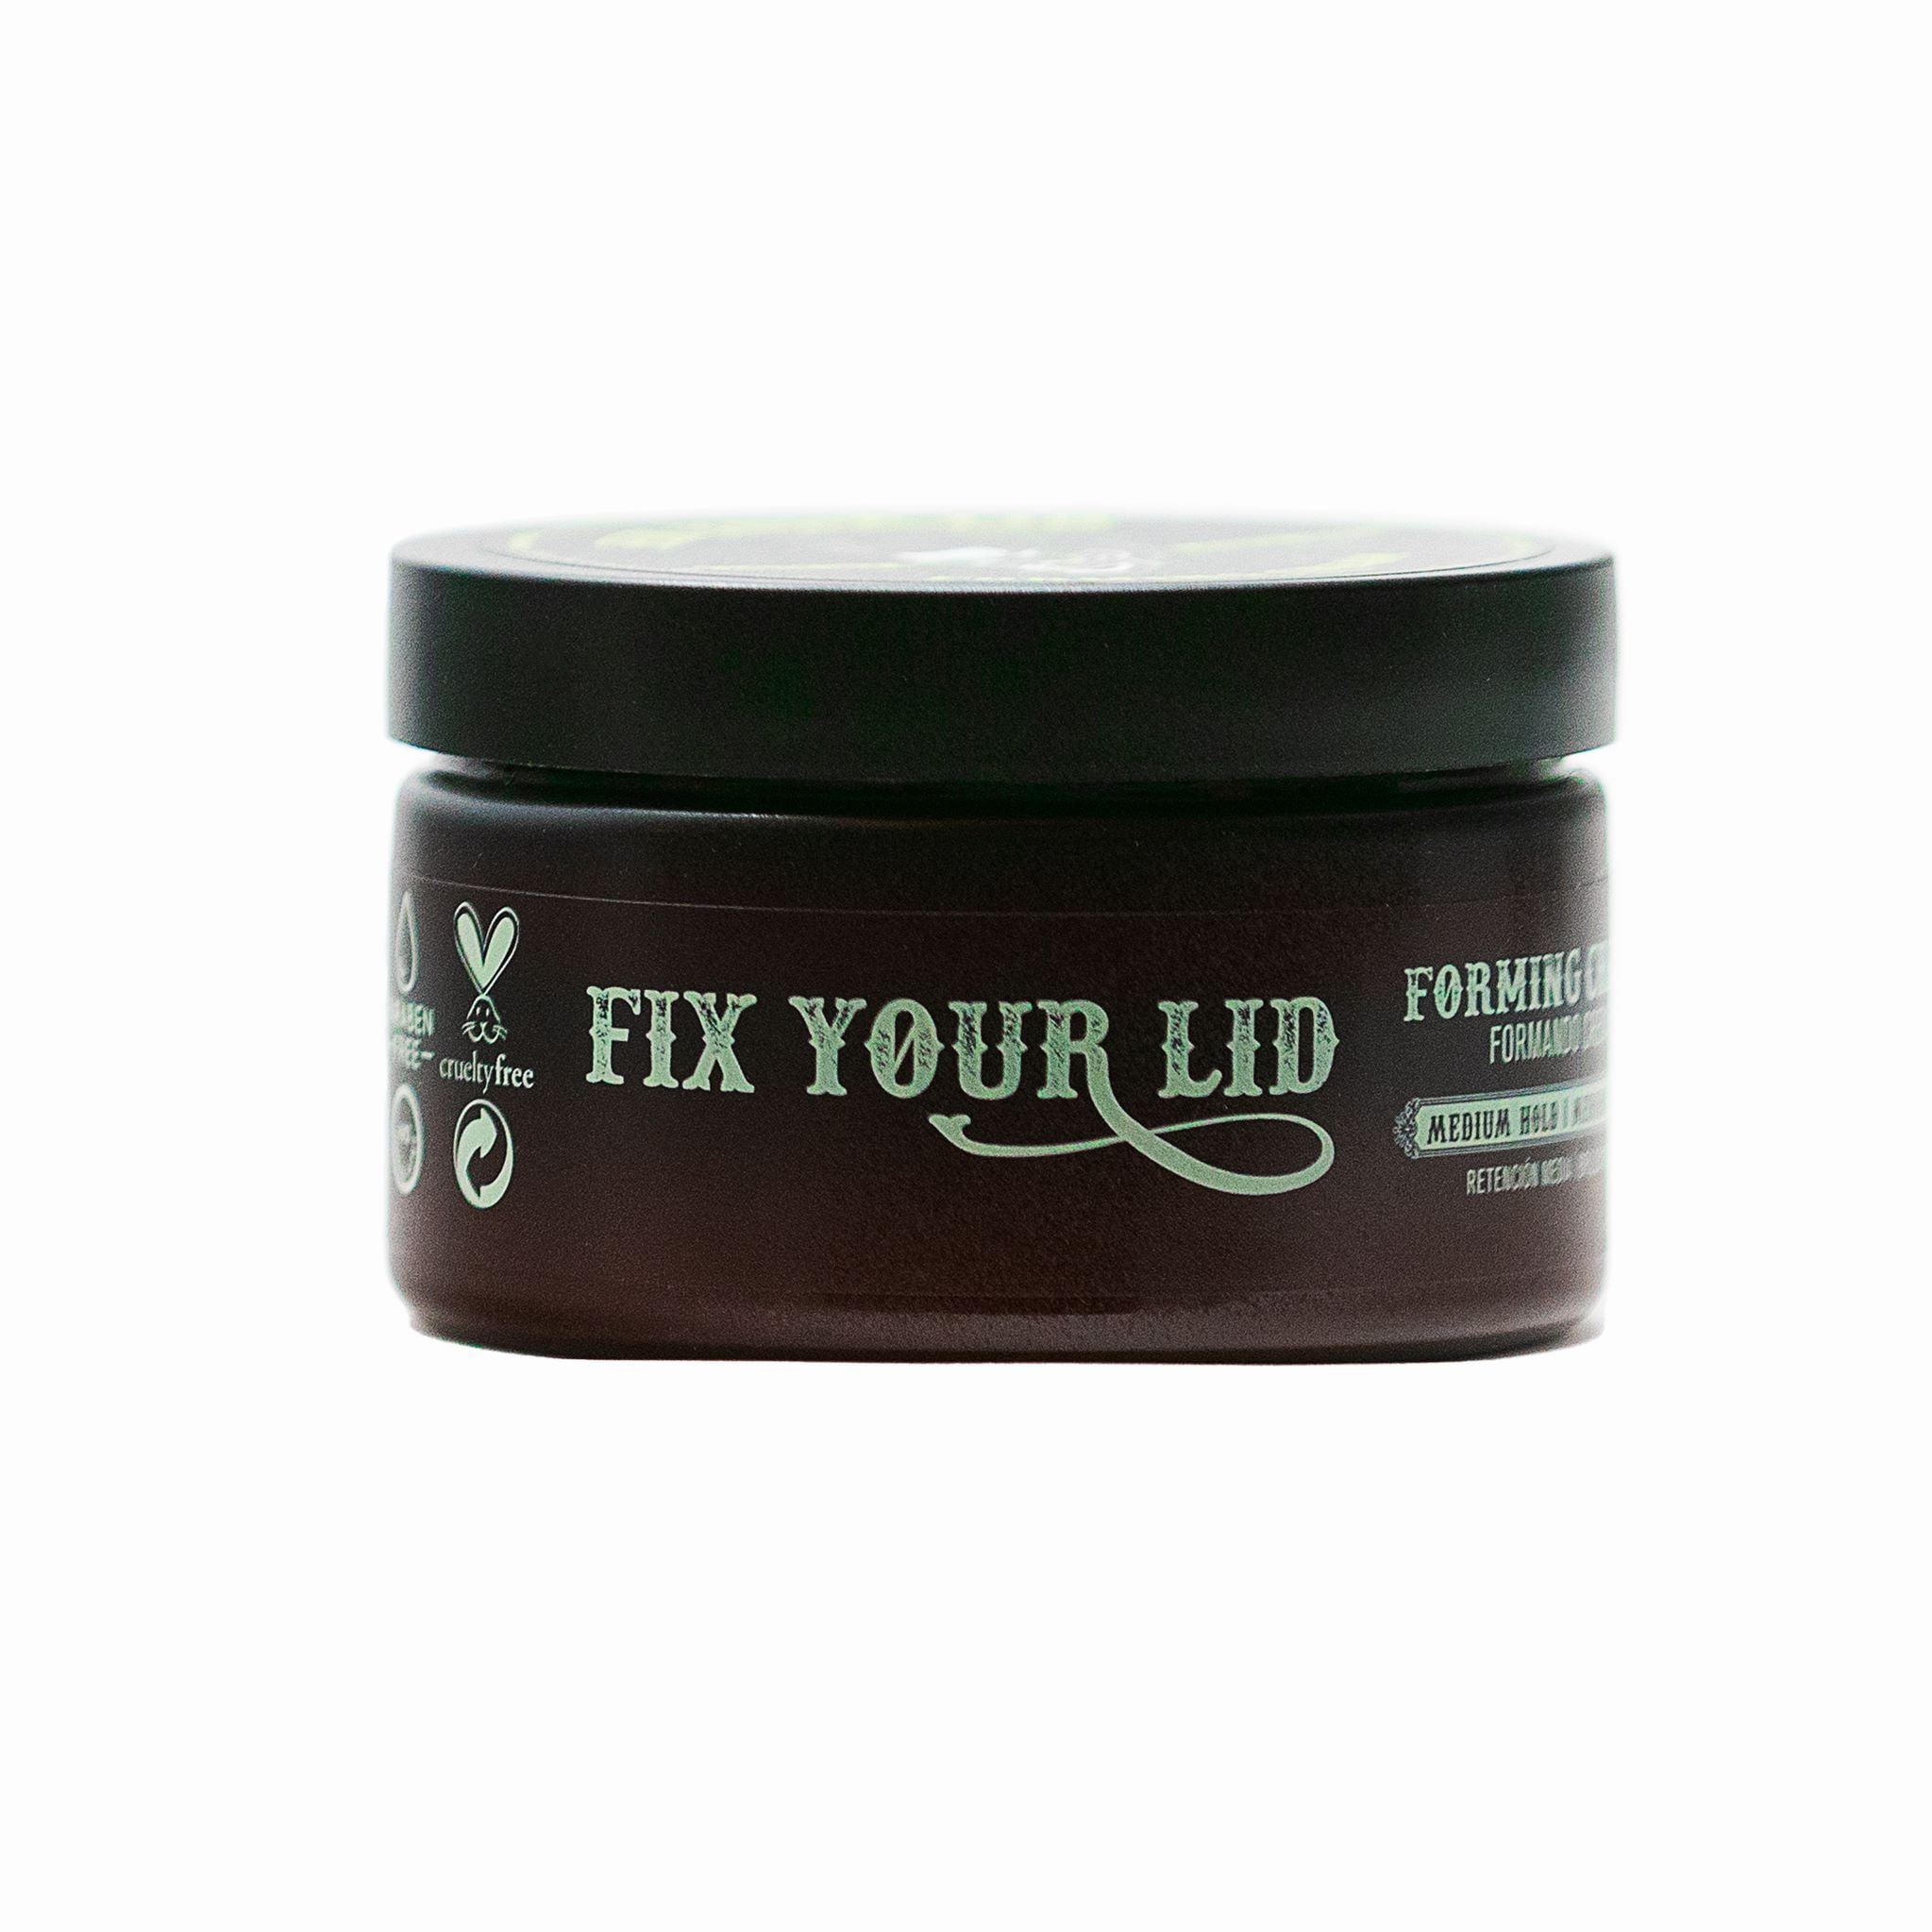 Fix Your Lid Forming Cream, Medium Hold Medium Shine, 1.7 oz/48 g